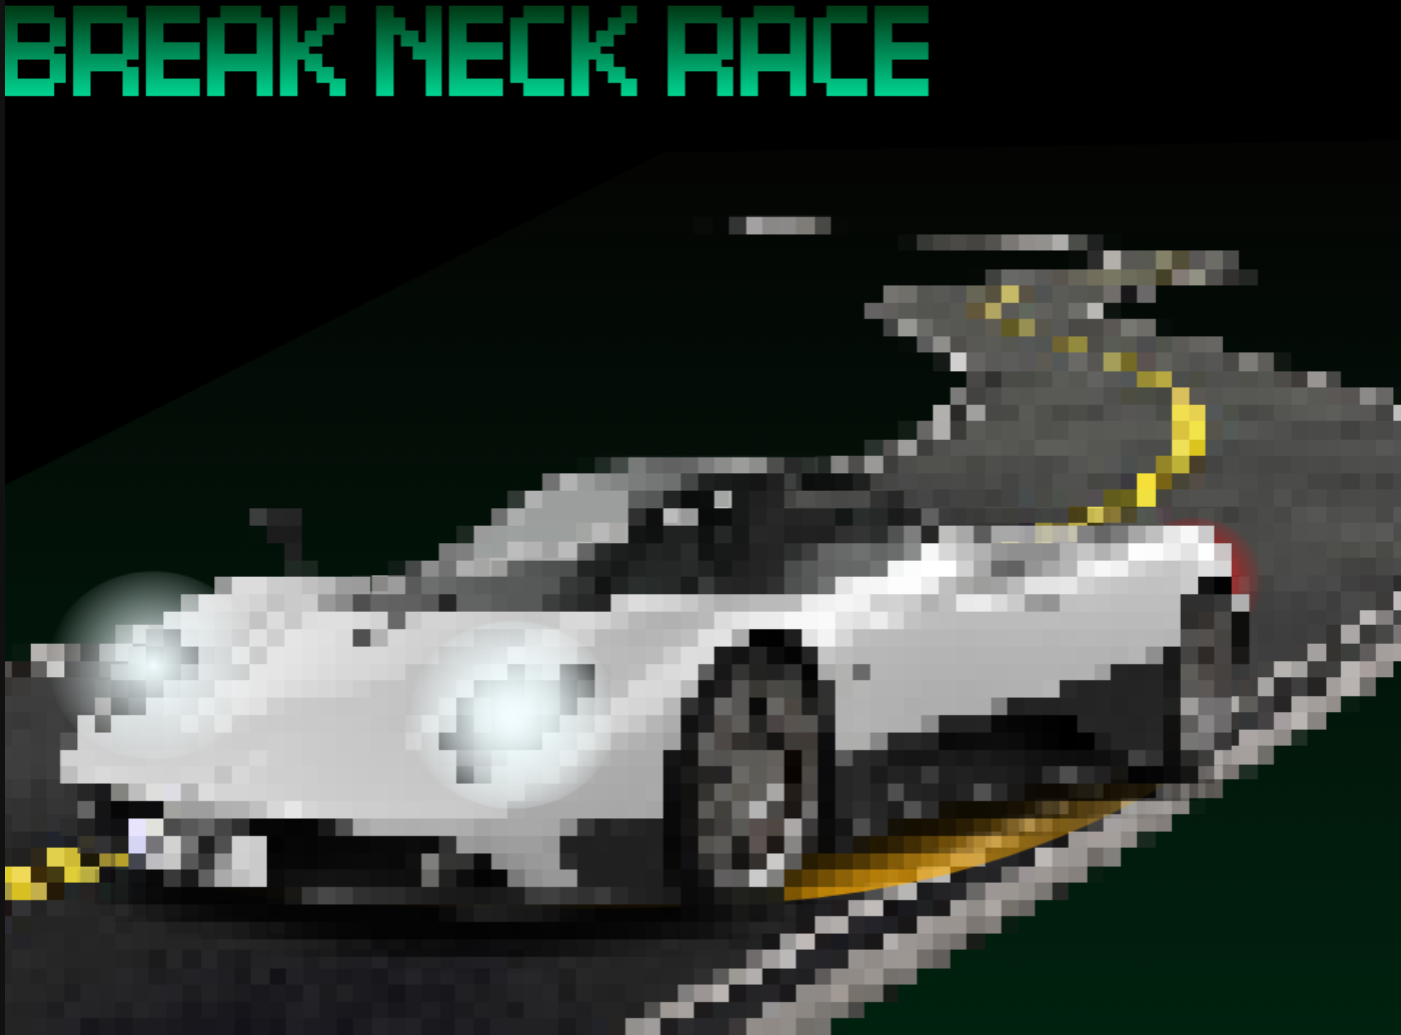 BREAK NECK RACE v4.0 PC